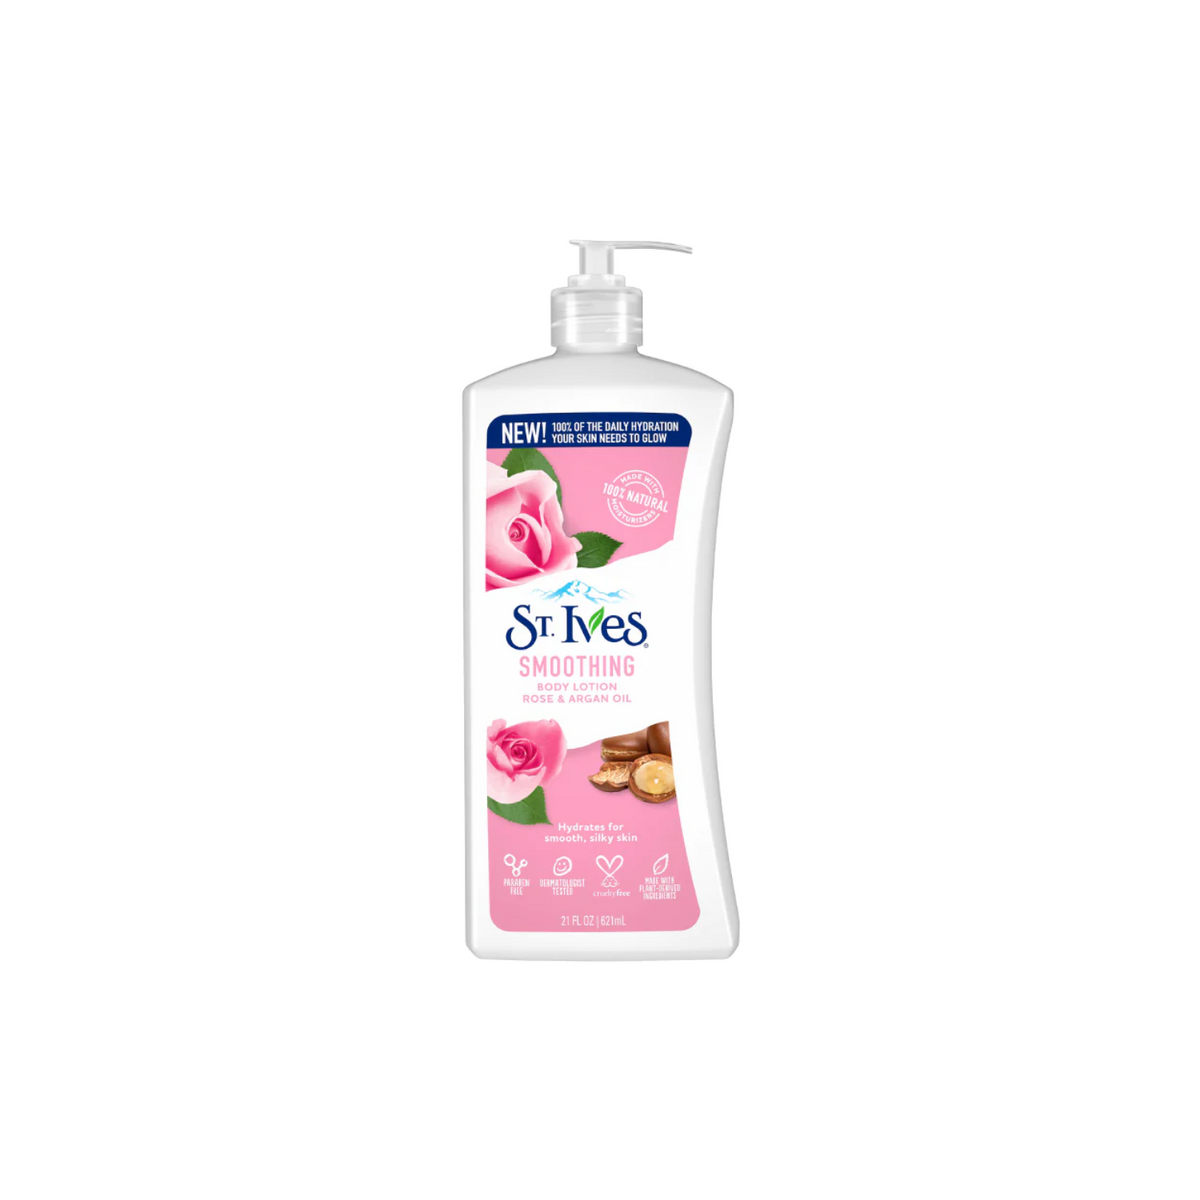 st-ives-smoothing-body-lotion-rose-argan-oil-621ml